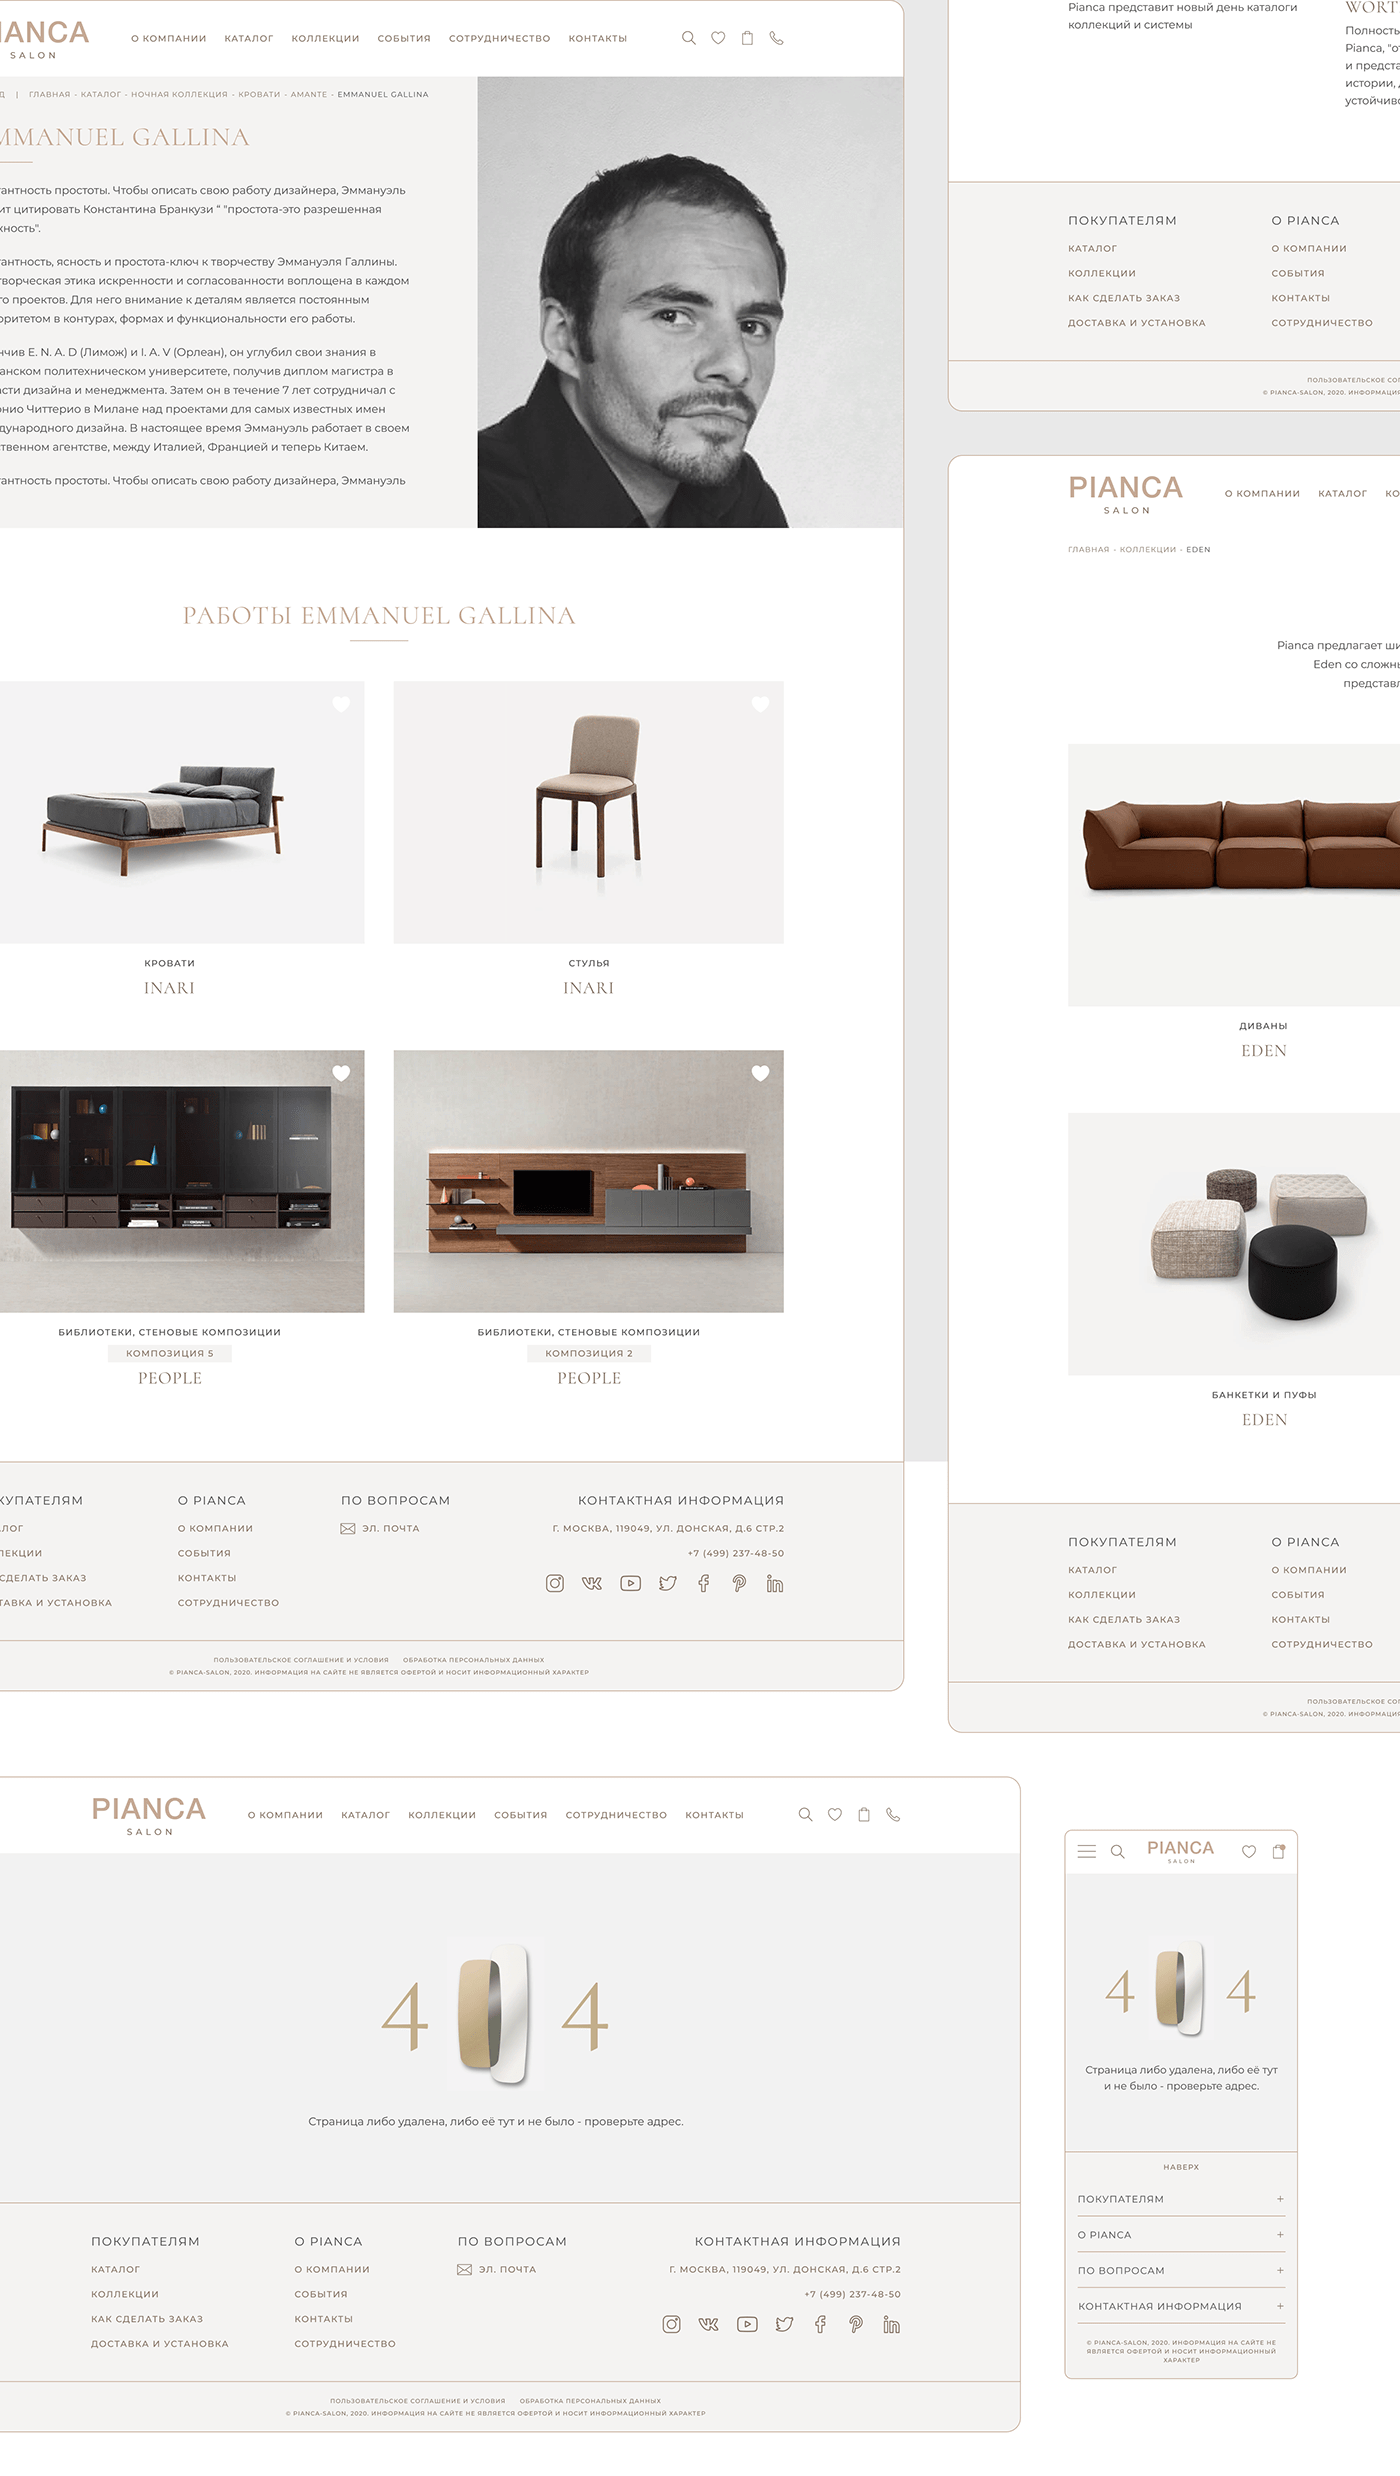 bed chair e-commerce furniture wood интернет магазин интерьер мебель interior store Online shop